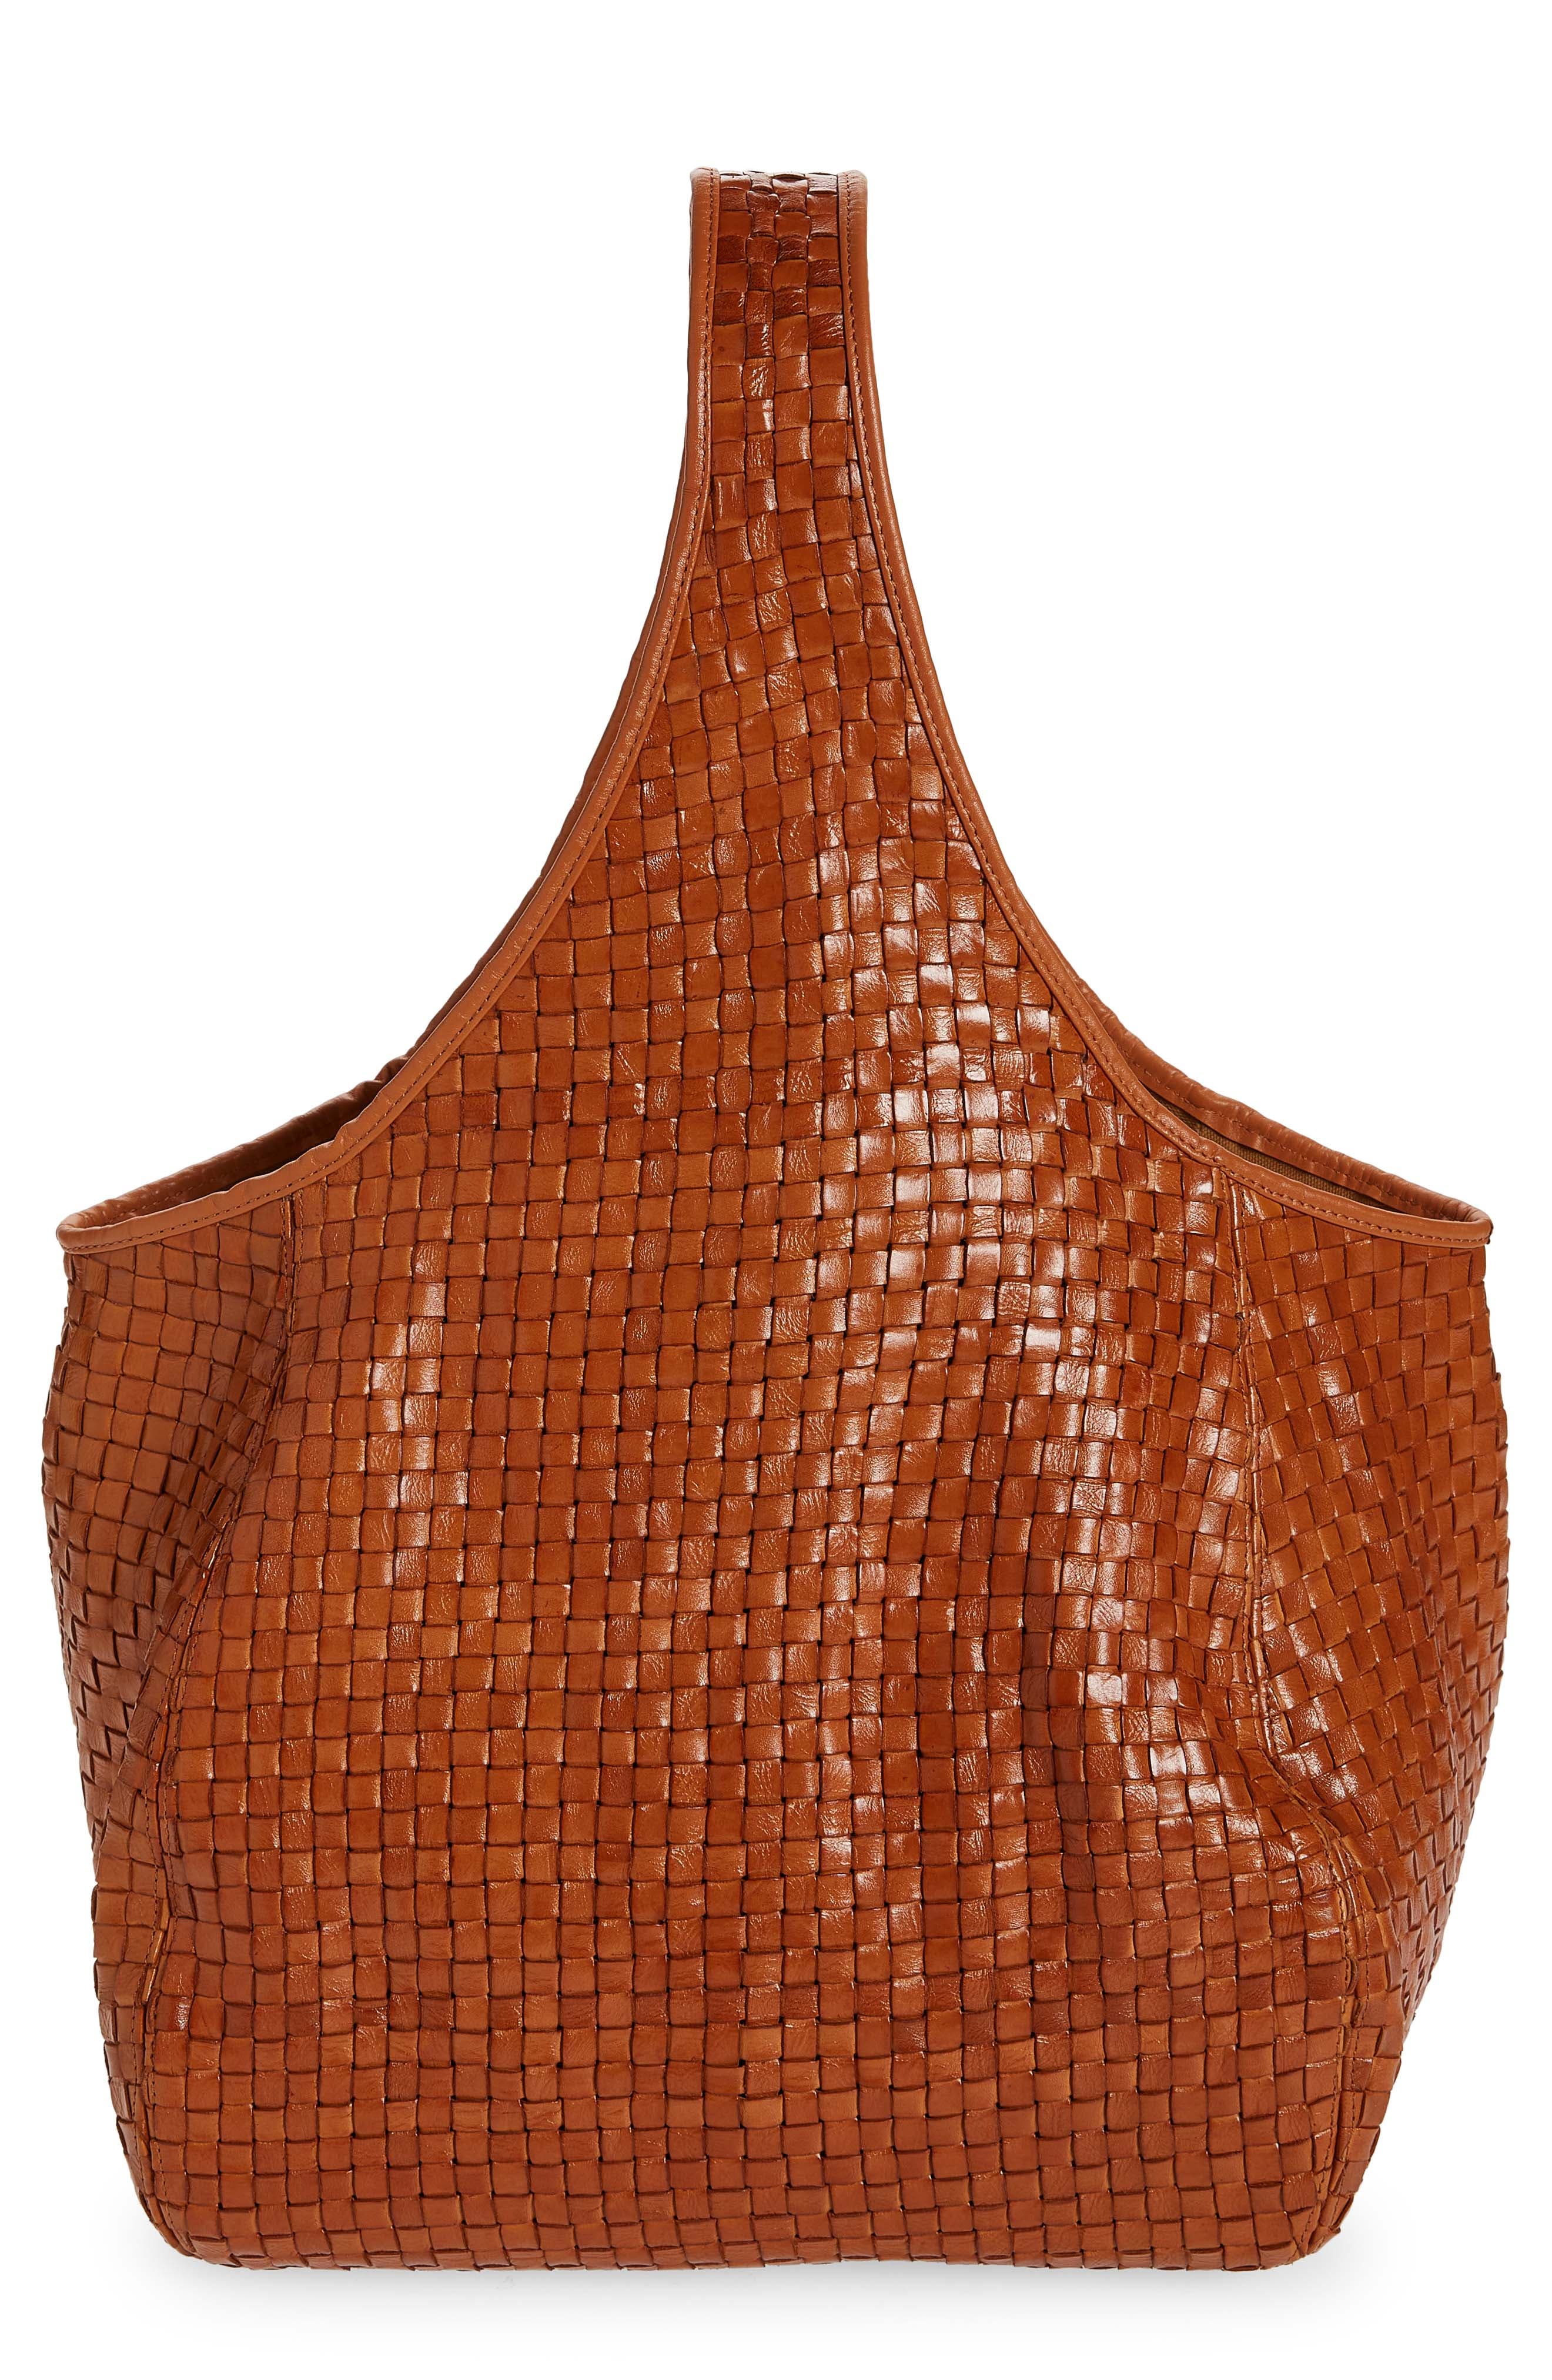 Clare V. Petit Moyen Messenger Bag in Natural Woven Checker